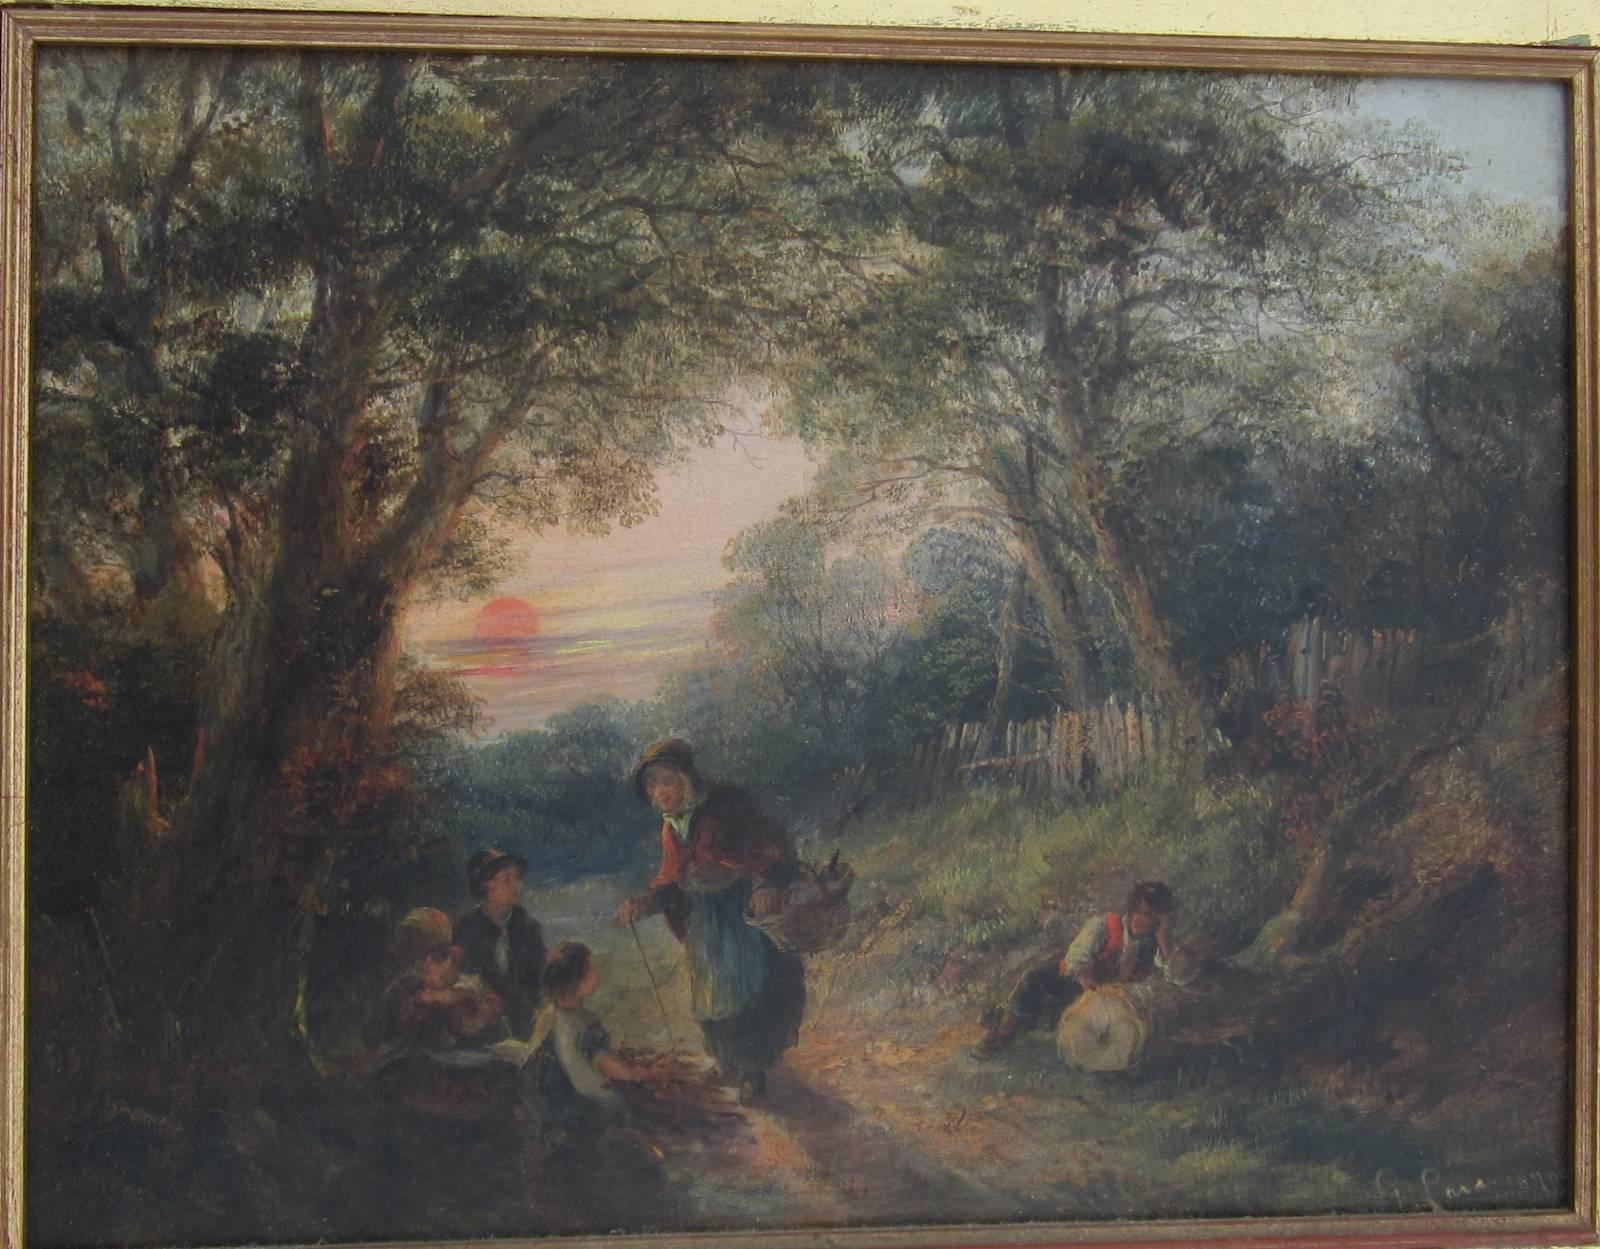 Georgina Lara, flourished 1862-1871,
English scene, oil on canvas
Original carved wooden gilt frame 63 x 62cm, image 28 x 22cm.